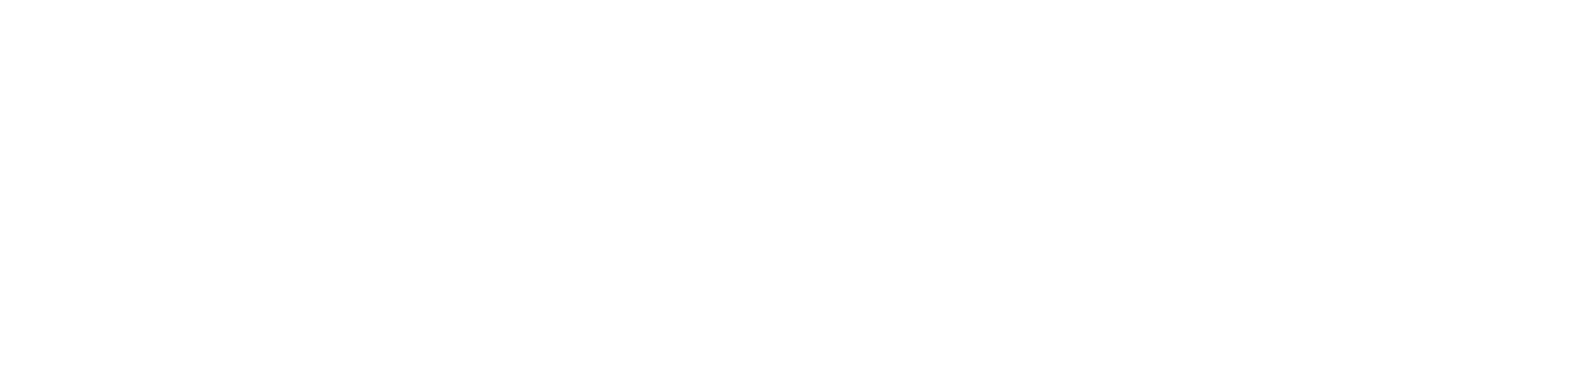 VIZIO logo for dark backgrounds (transparent PNG)